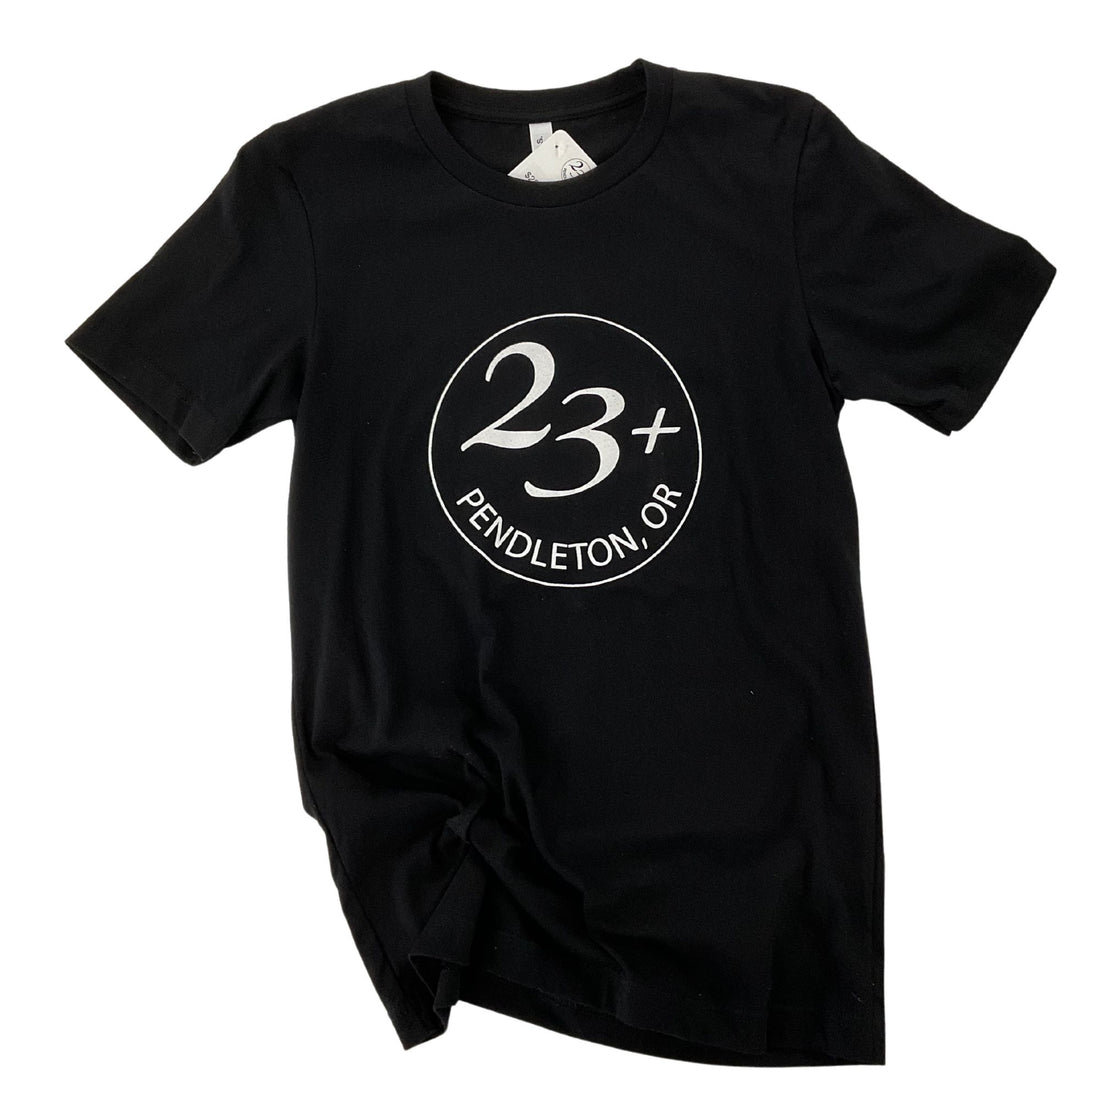 23+ Logo T-shirt Crew Neck- Black